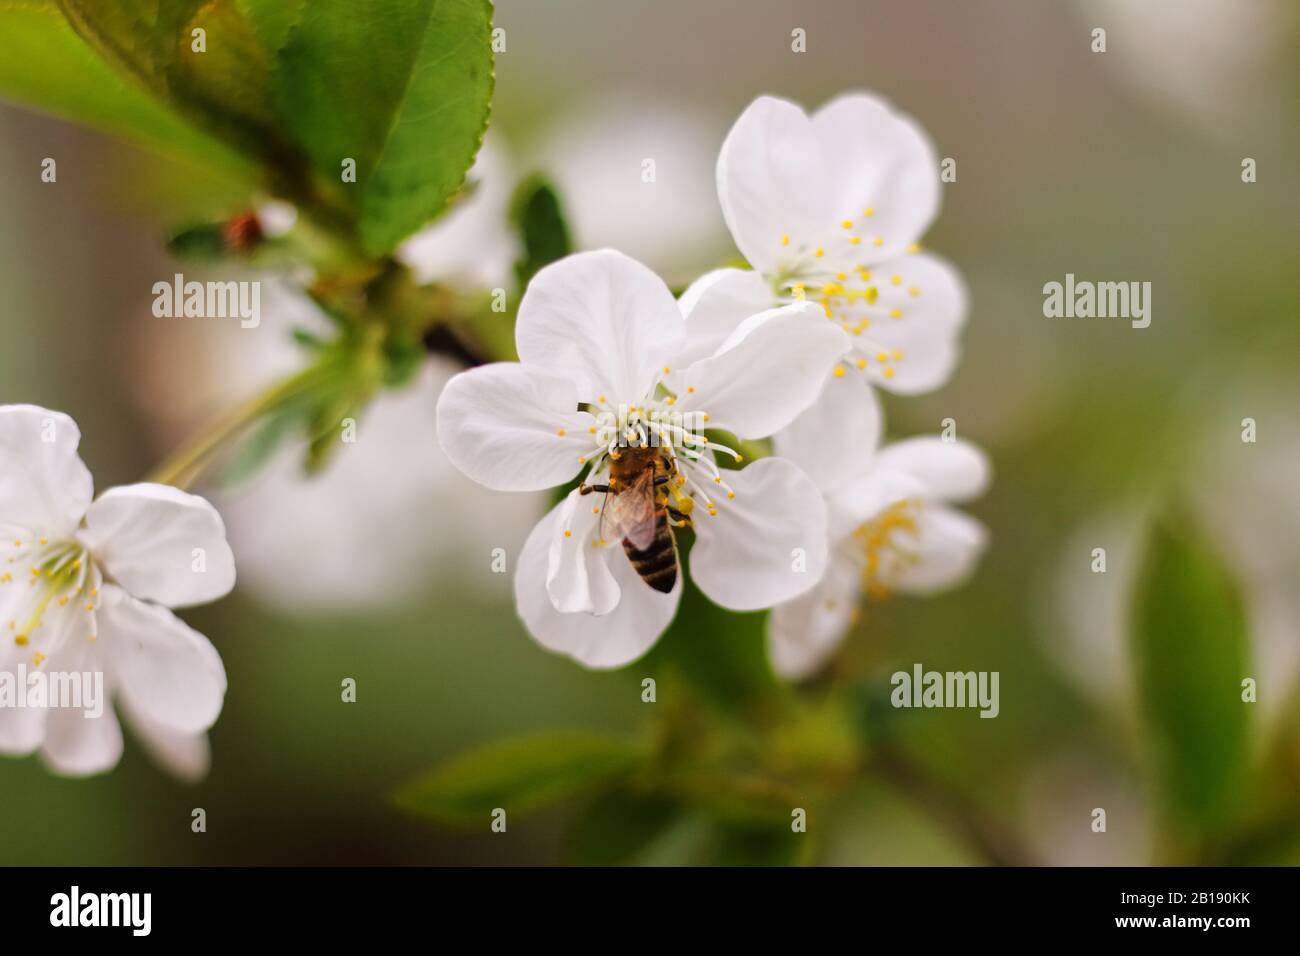 Fondo De Pantalla De Primavera. Closeup abeja bebe néctar de flores de cereza blanca. Foto de stock